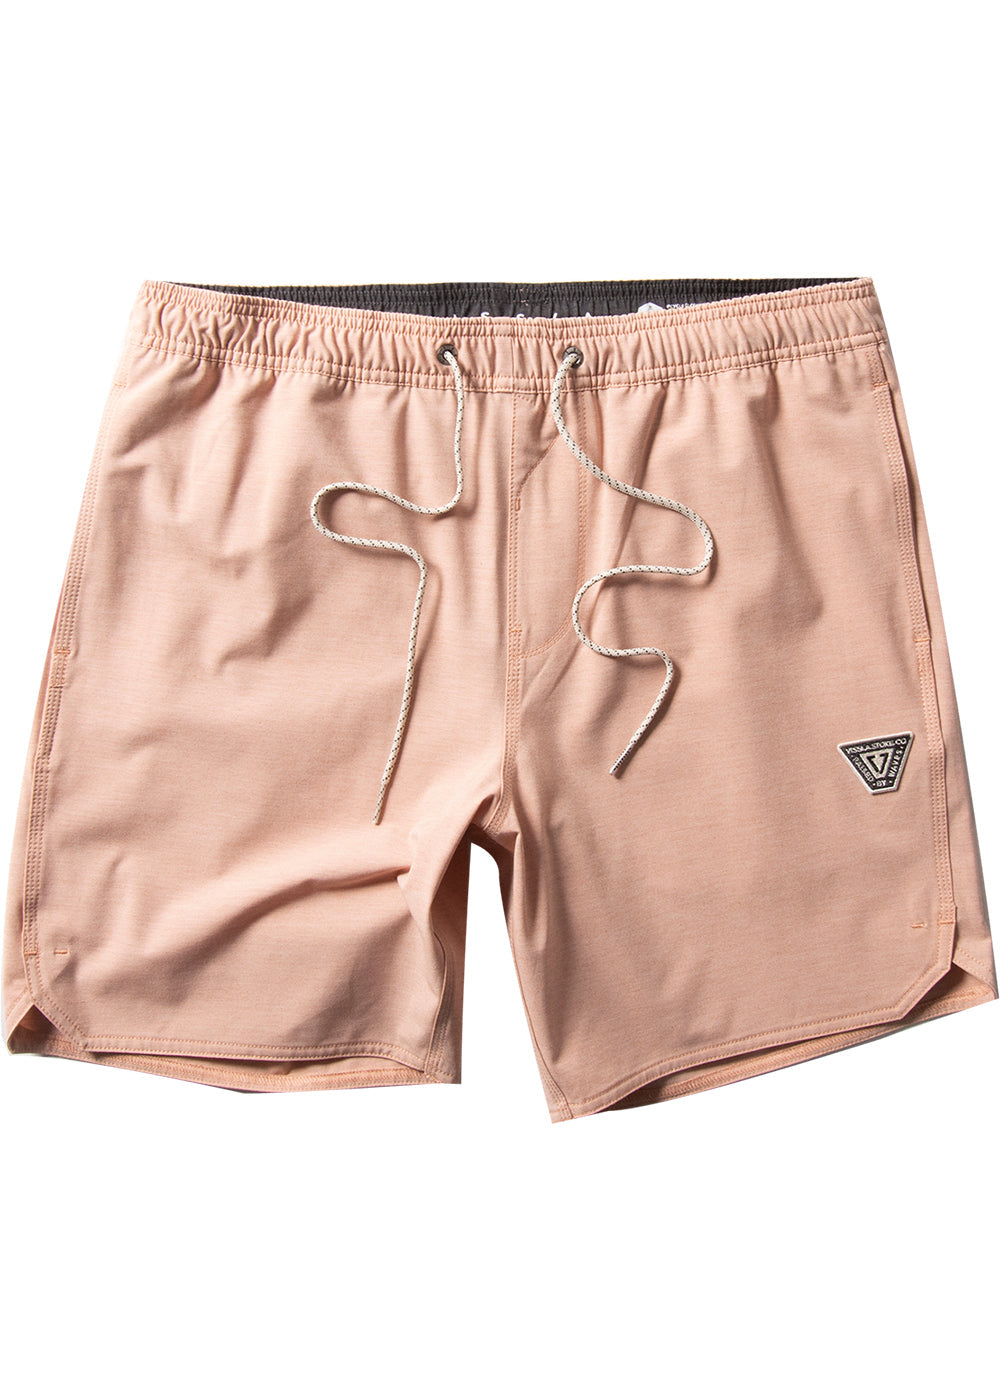 Vissla Solid Sets 17.5" Ecolastic Shorts DOG S